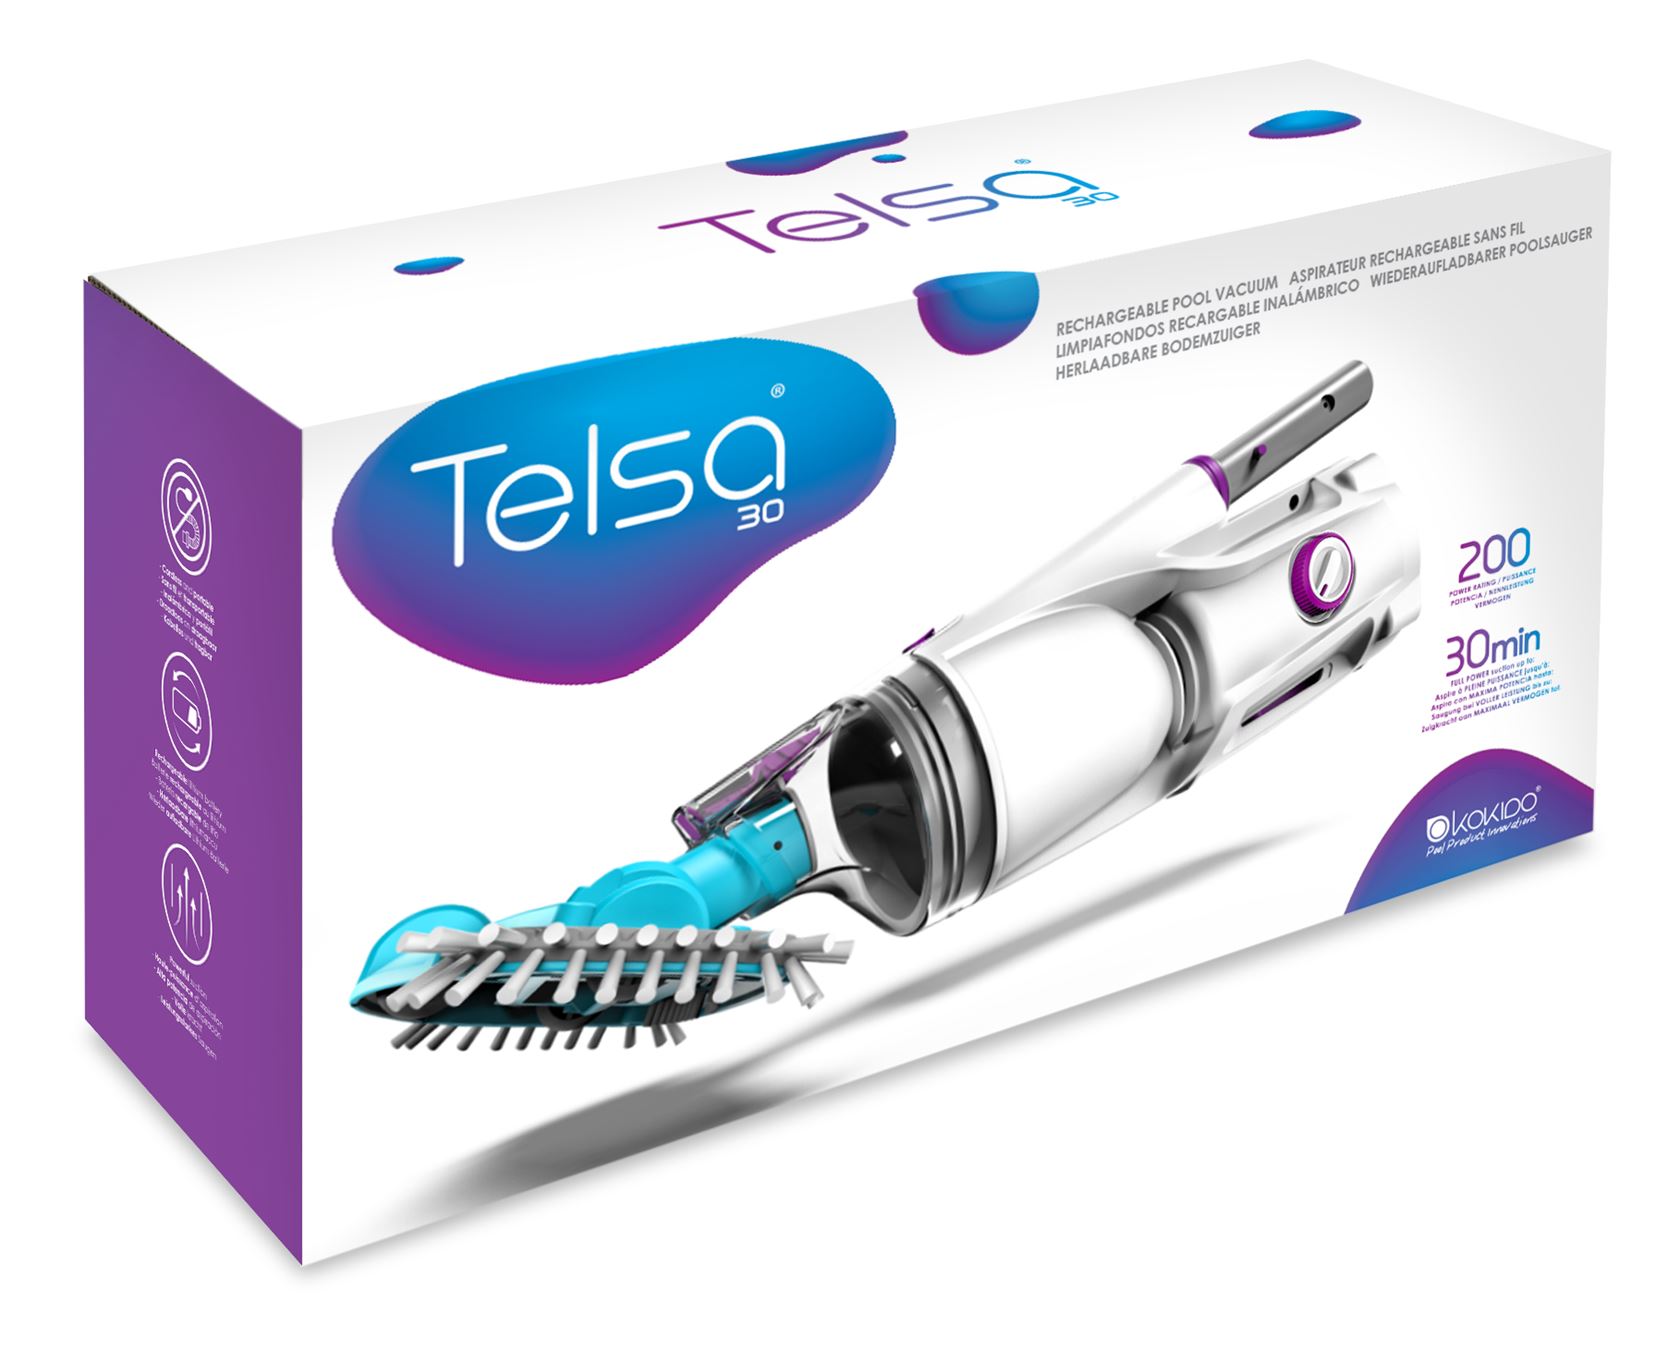 TELSA-30-Rechargeable-Spa-Pool-Vacuum